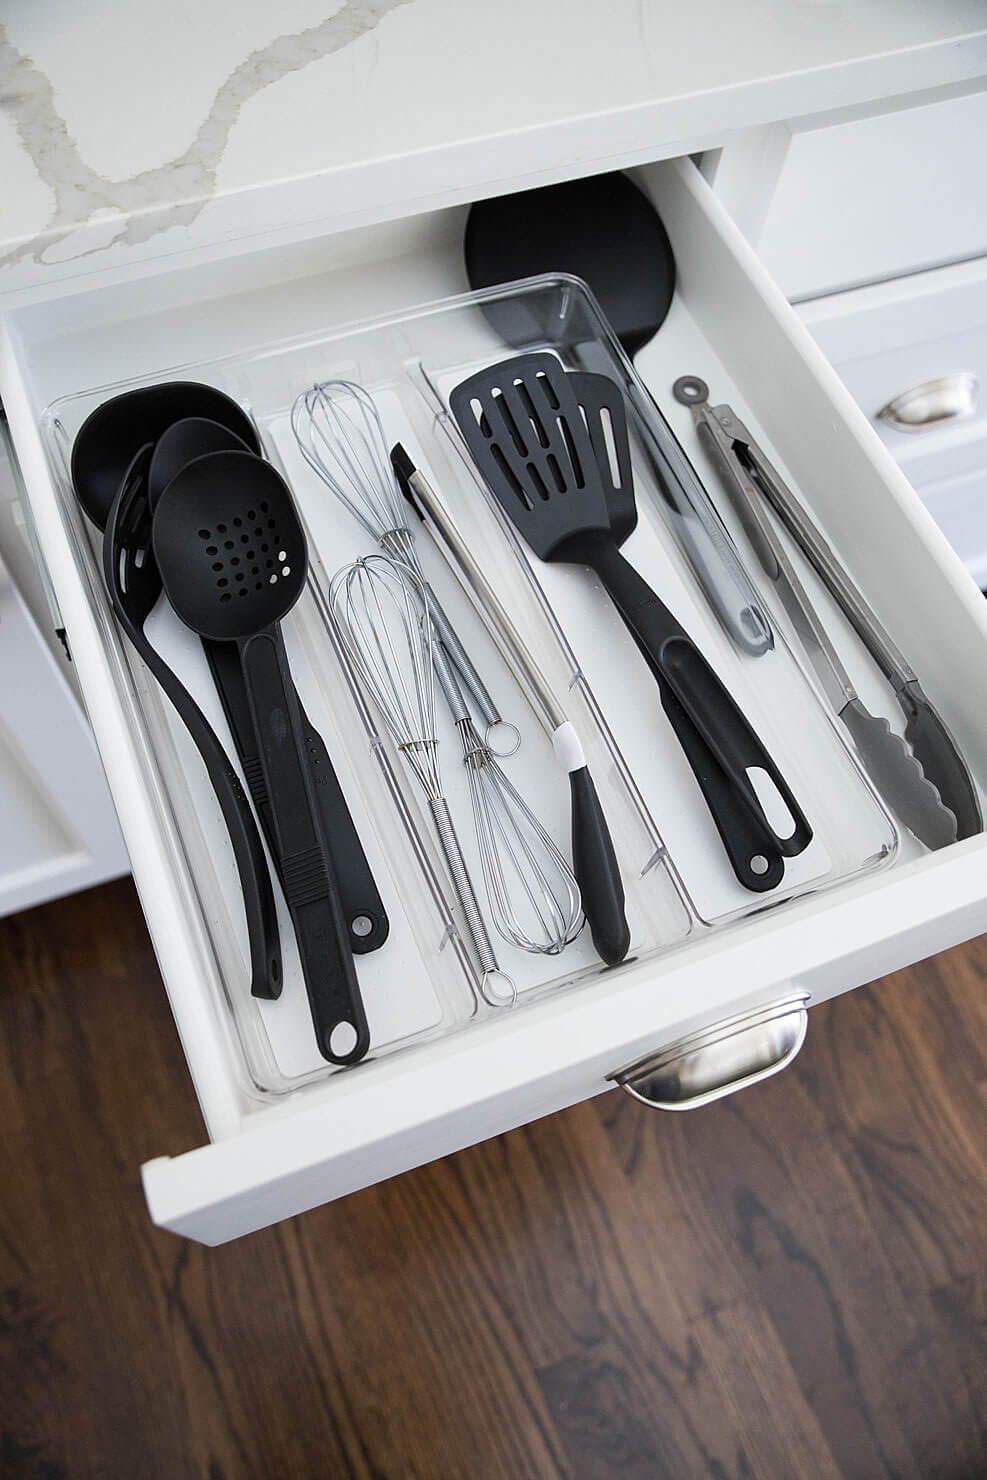 How to organize your kitchen cabinets - kitchen utensils